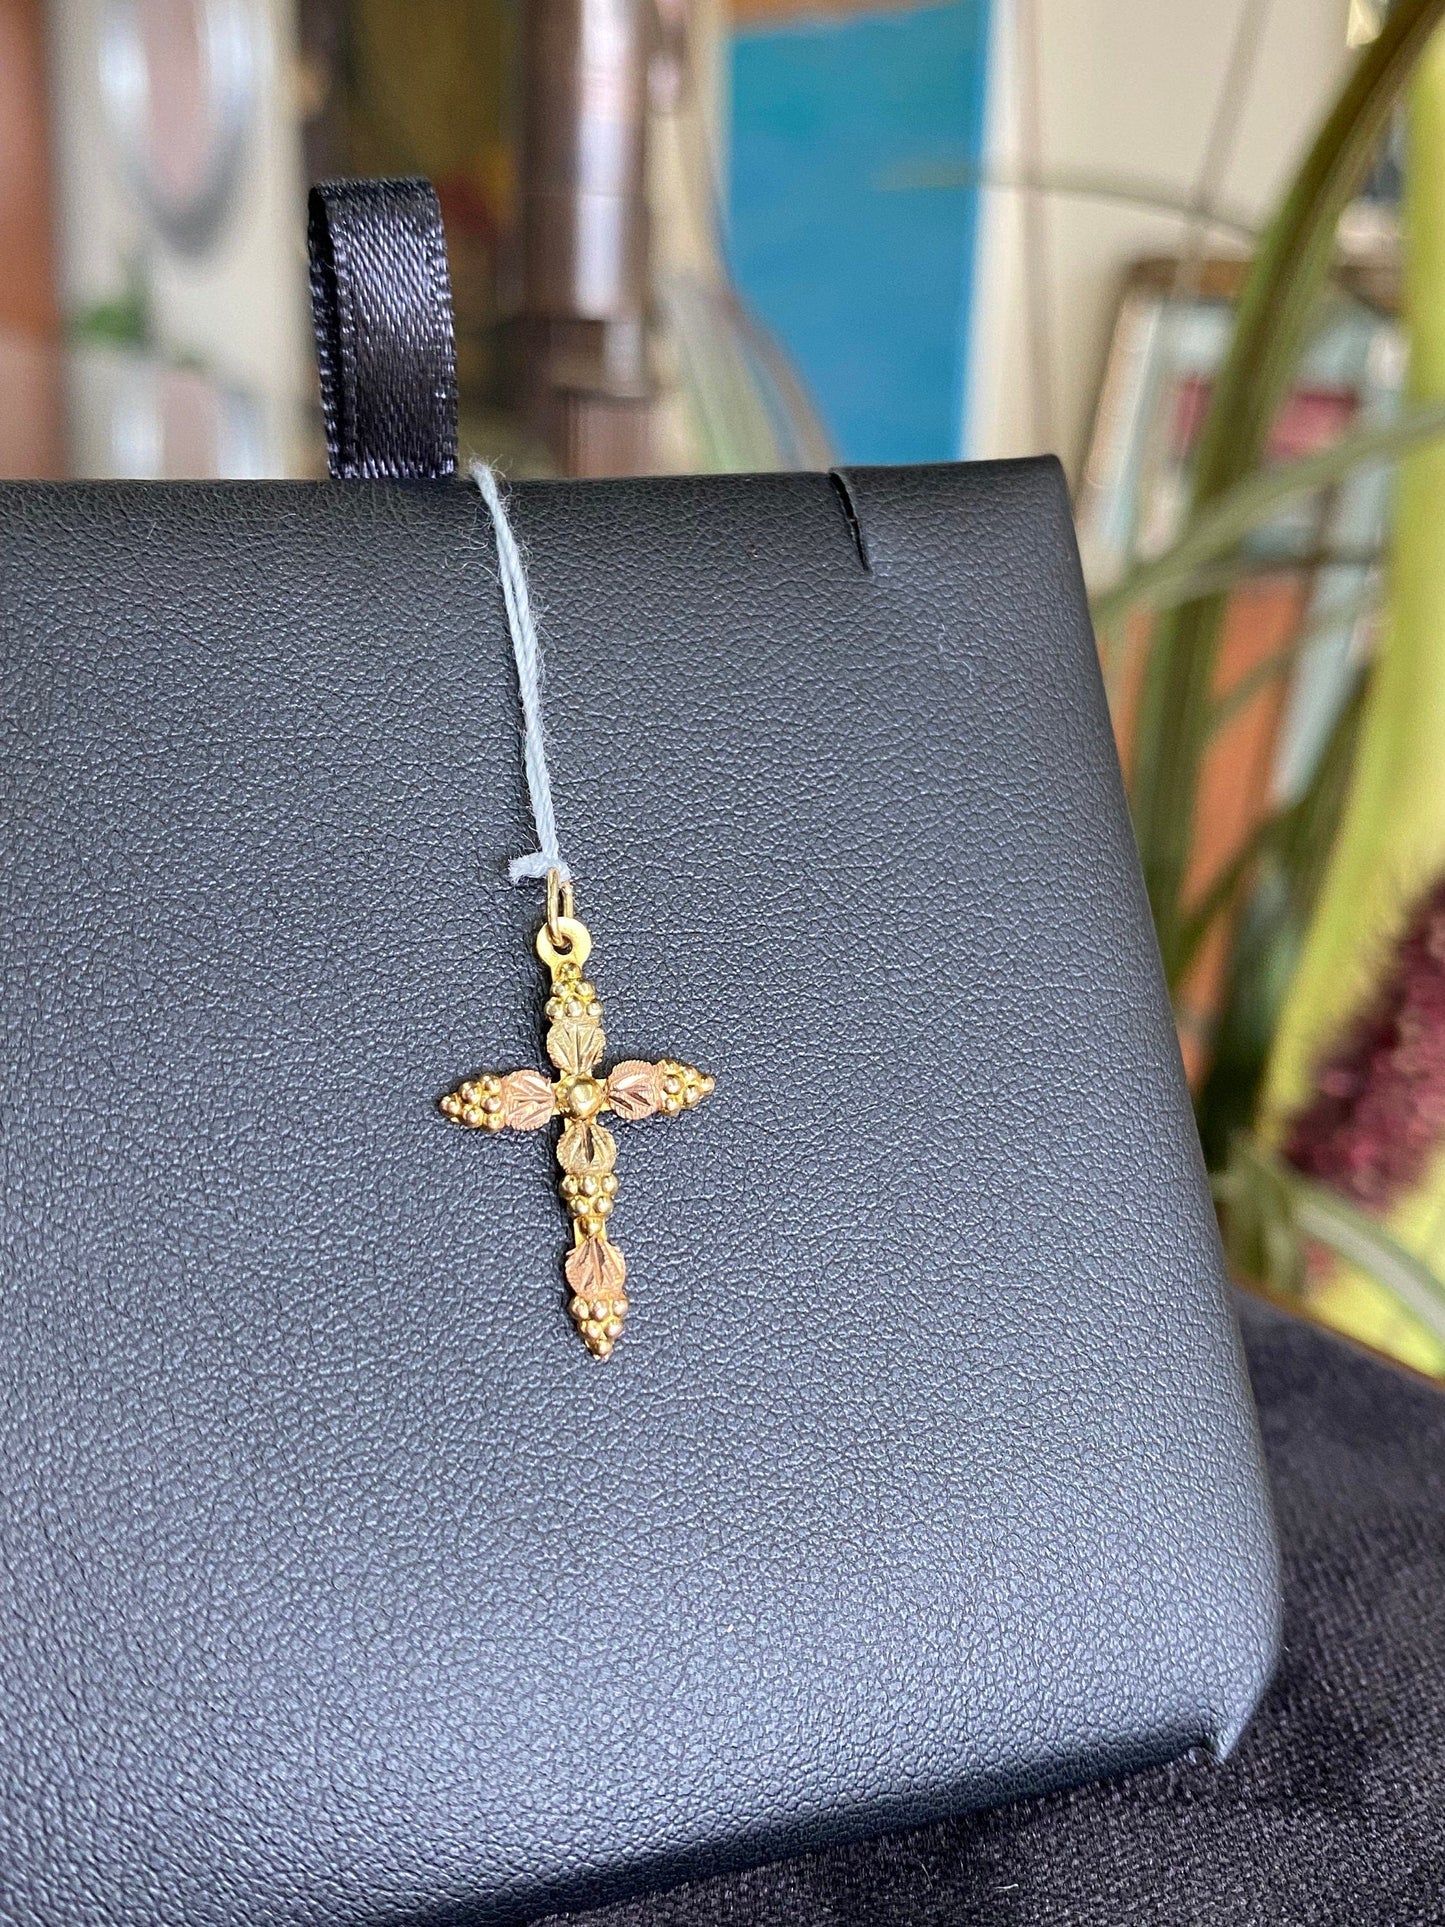 Black Hills Gold Cross with Floral Design 10kt Gold Pendant Charm